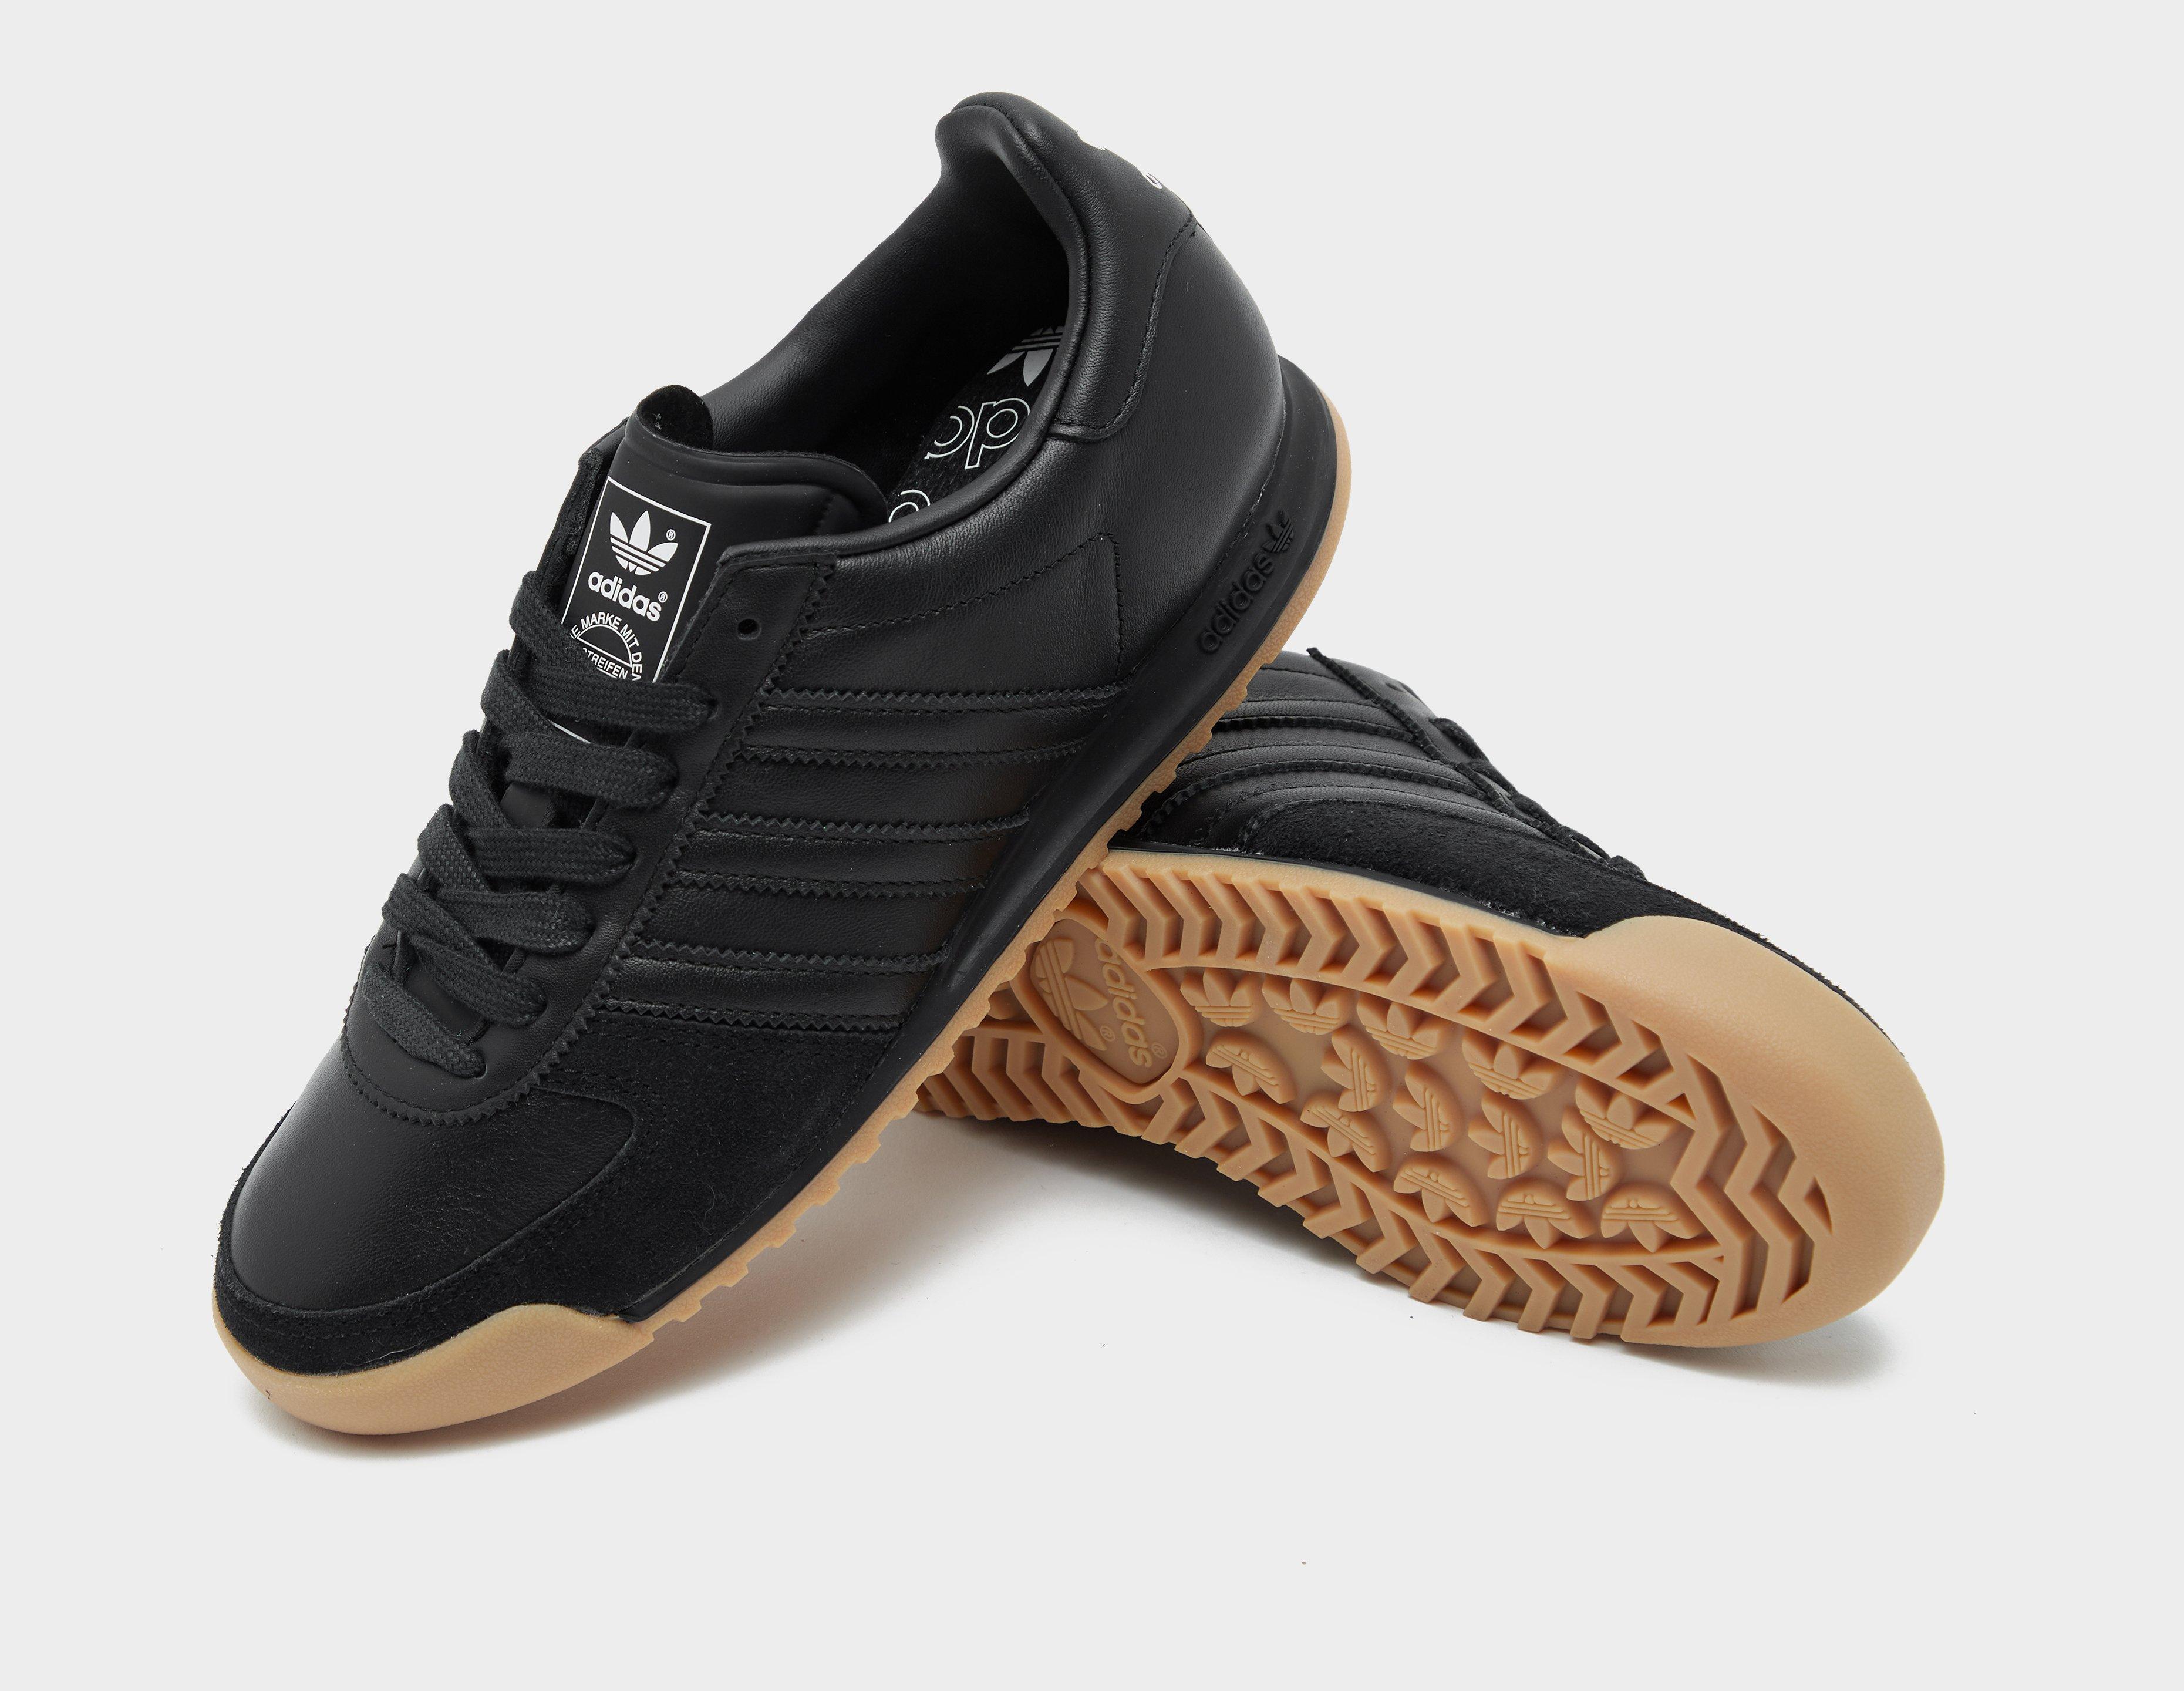 adidas Black Healthdesign? - Team adidas sneakers rose | ?exclusive Archive gold Originals All white -